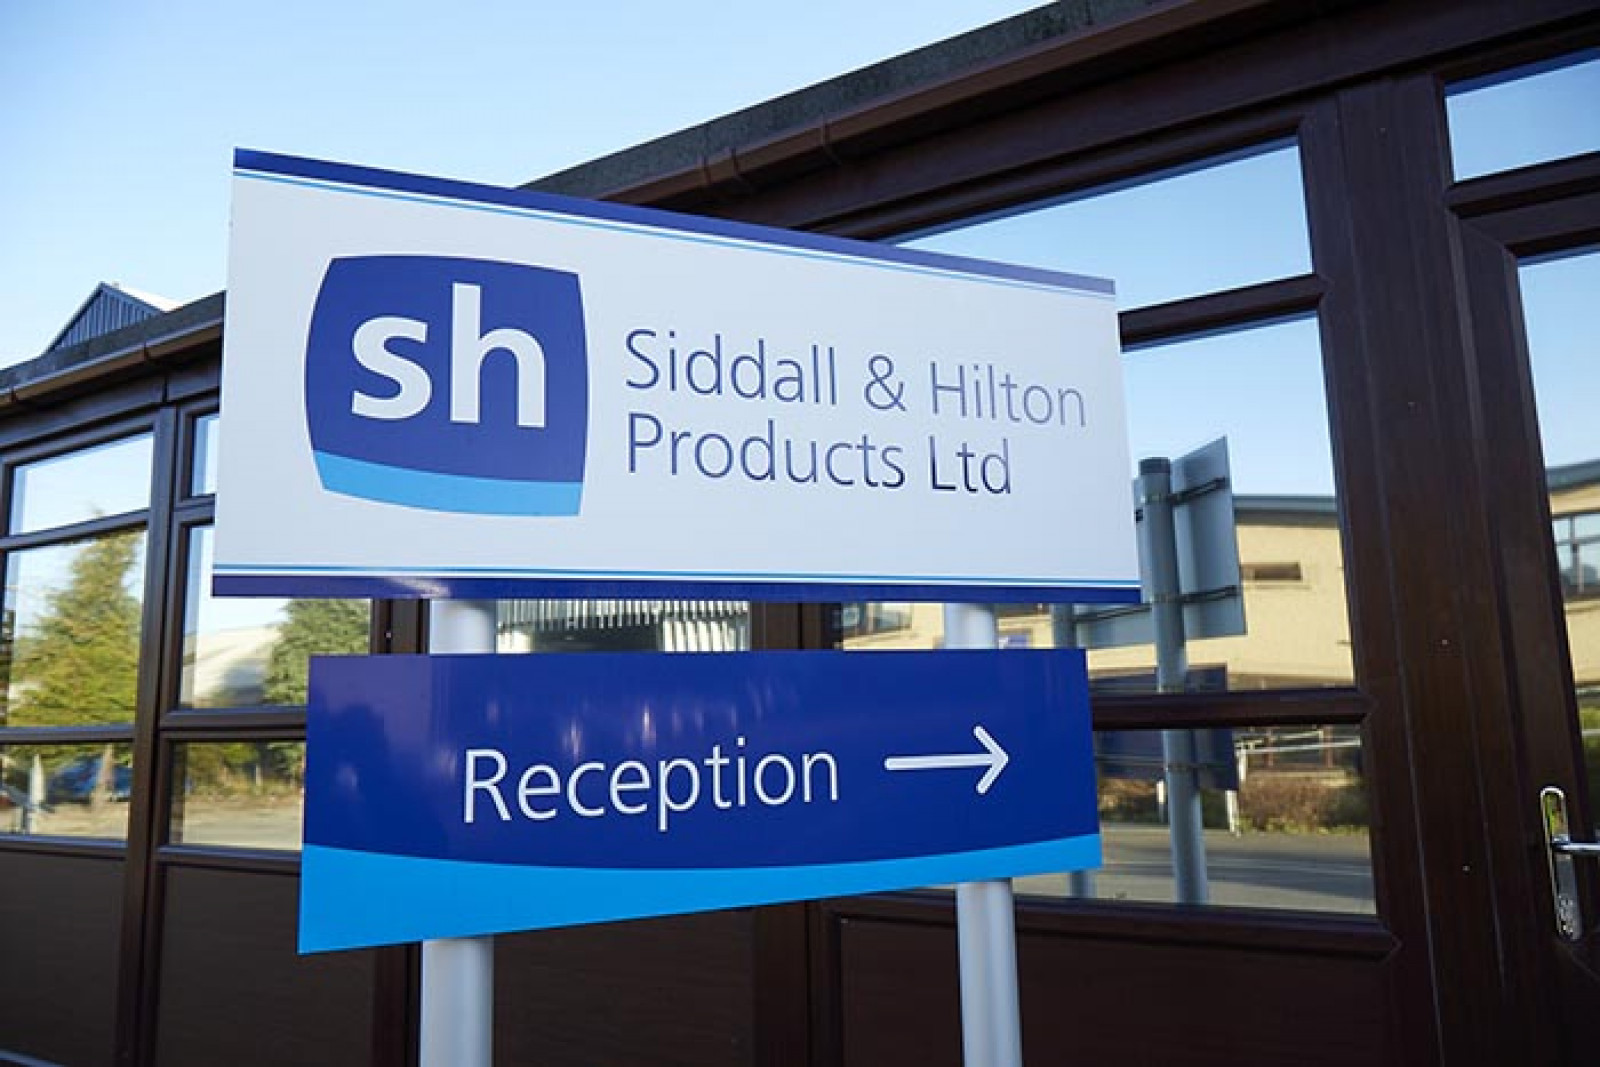 Rising Profits for Siddall & Hilton Despite COVID...